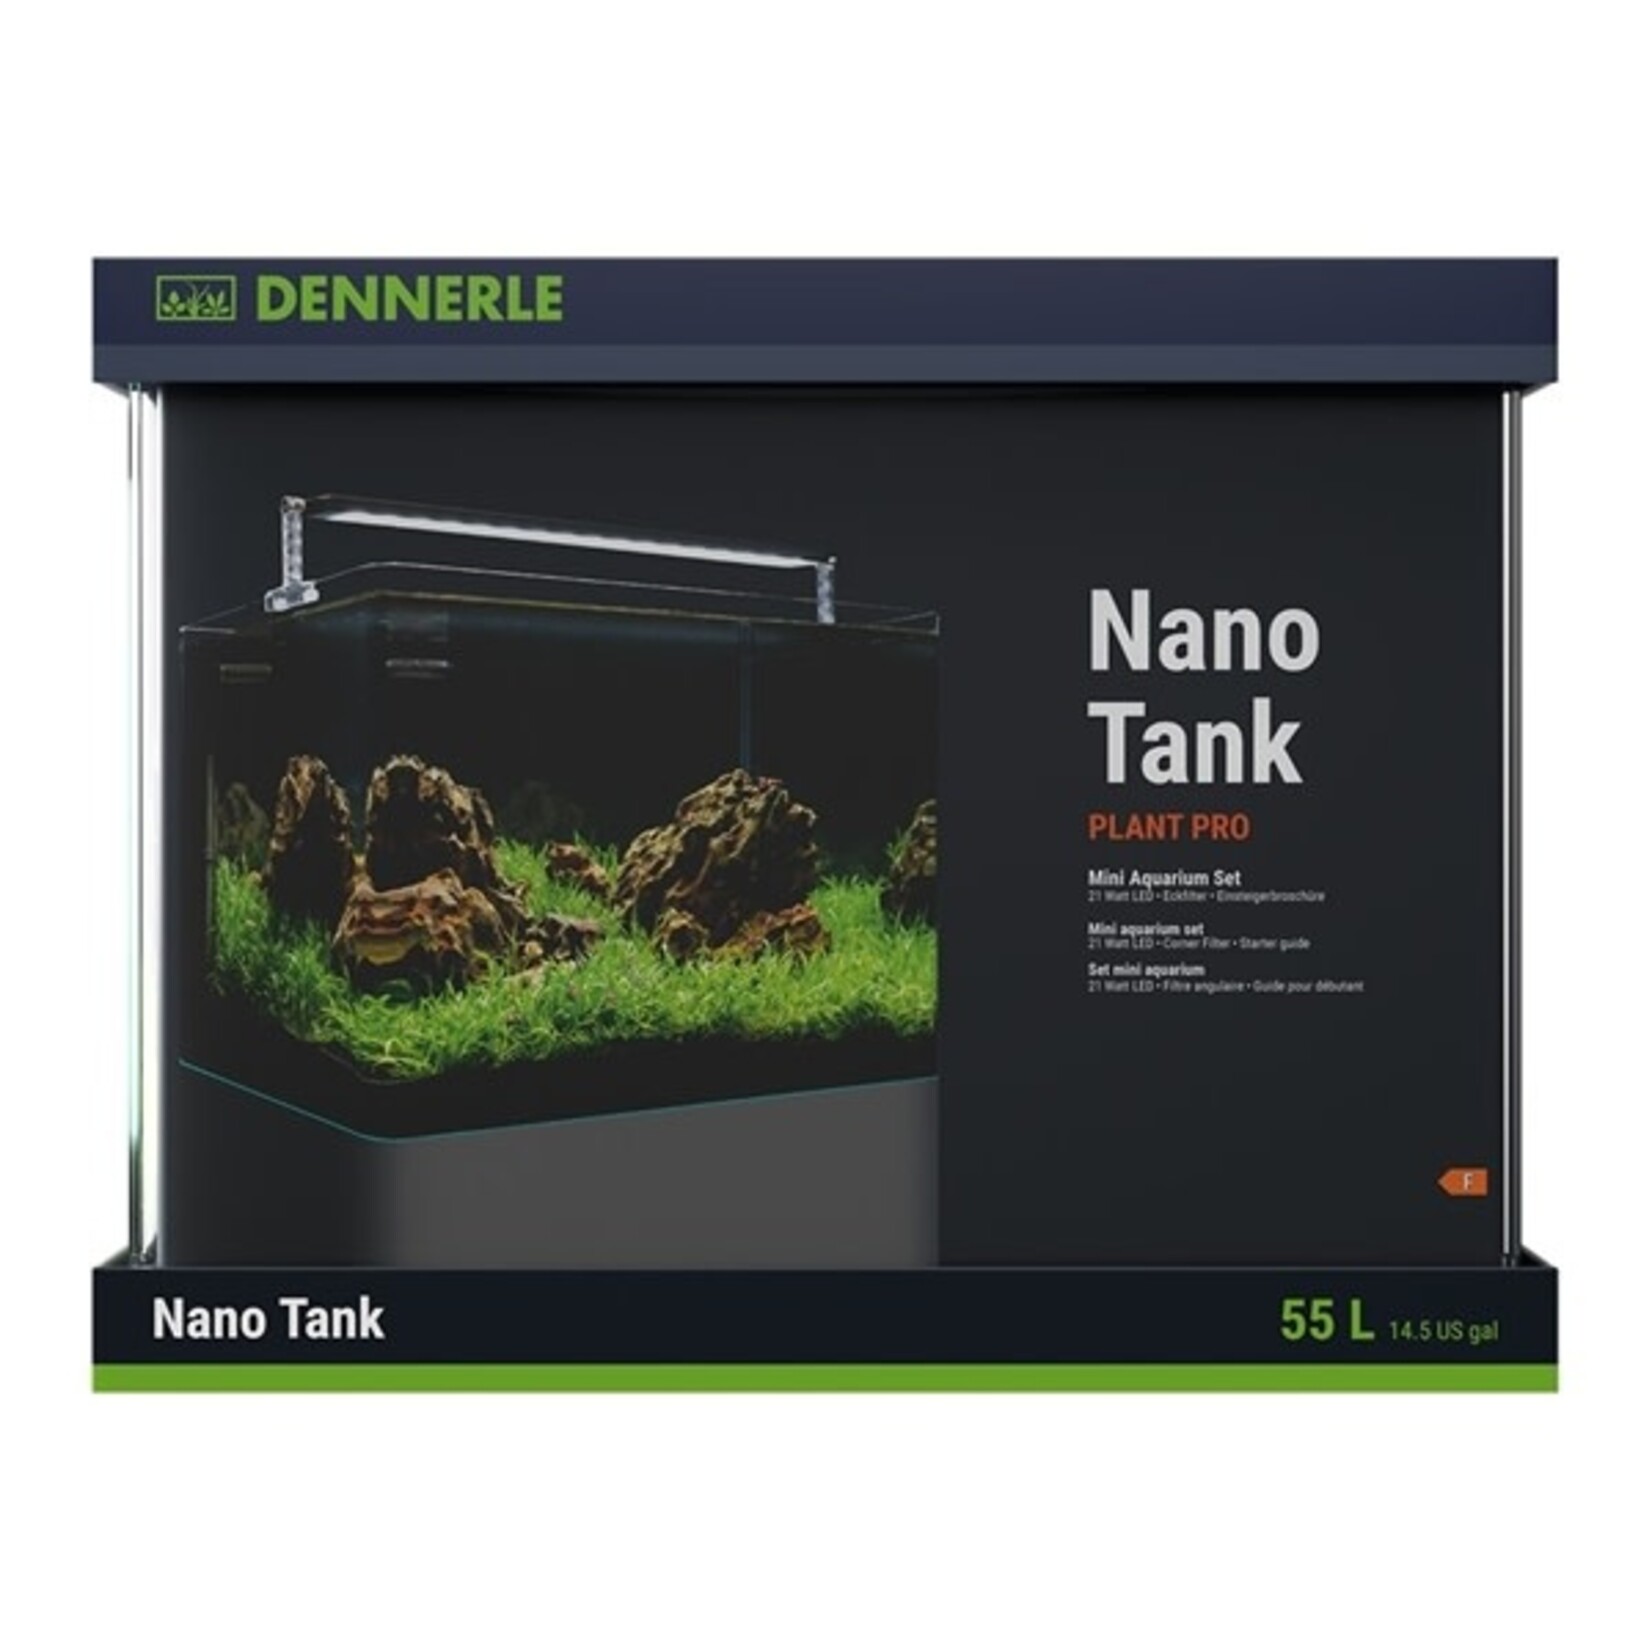 Dennerle DENNERLE NANO TANK PLANT PRO 55 L